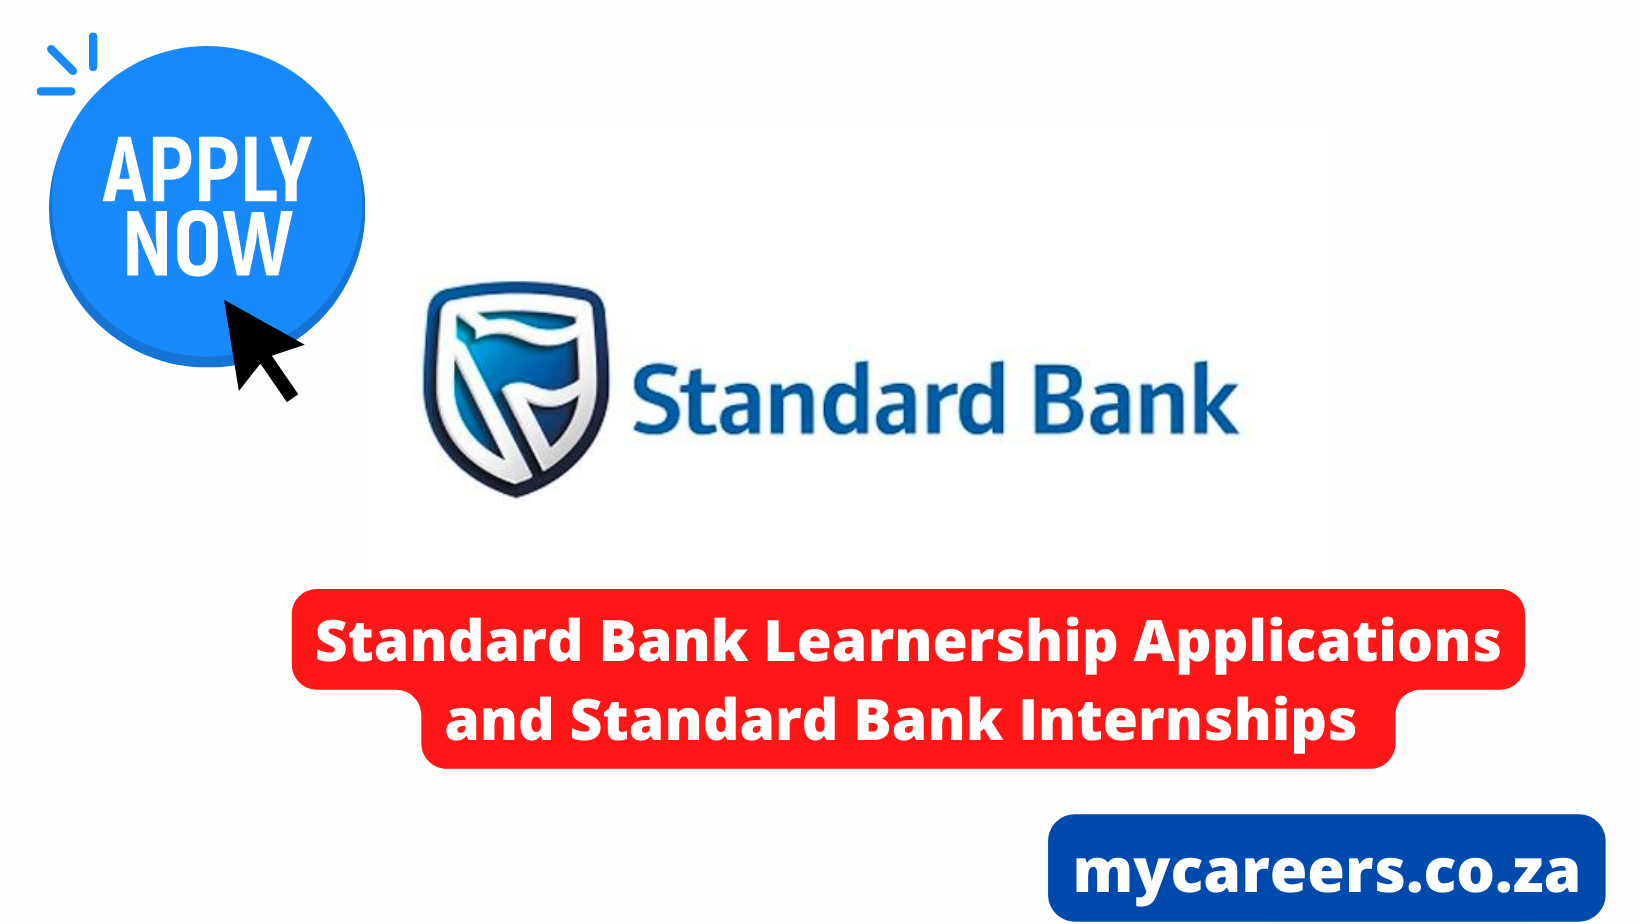 Standard Bank Learnership Applications and Standard Bank Internships 